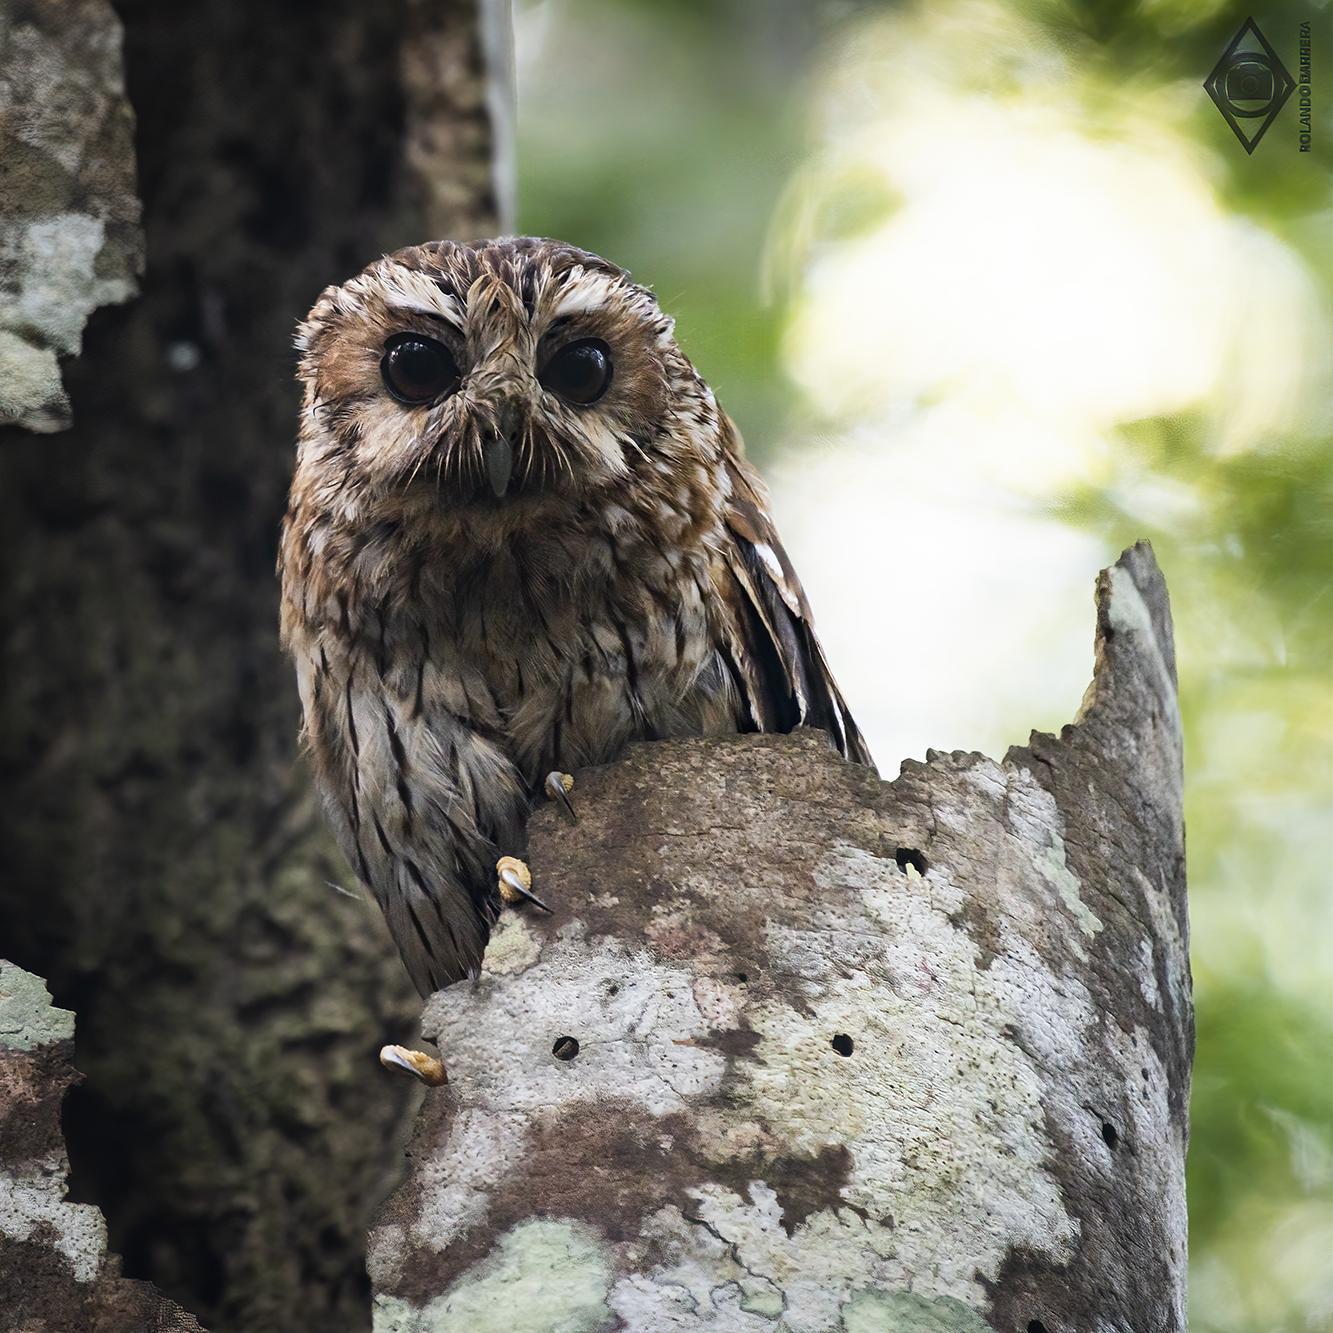 Bare-legged Owl Photo by Rolando Barrera